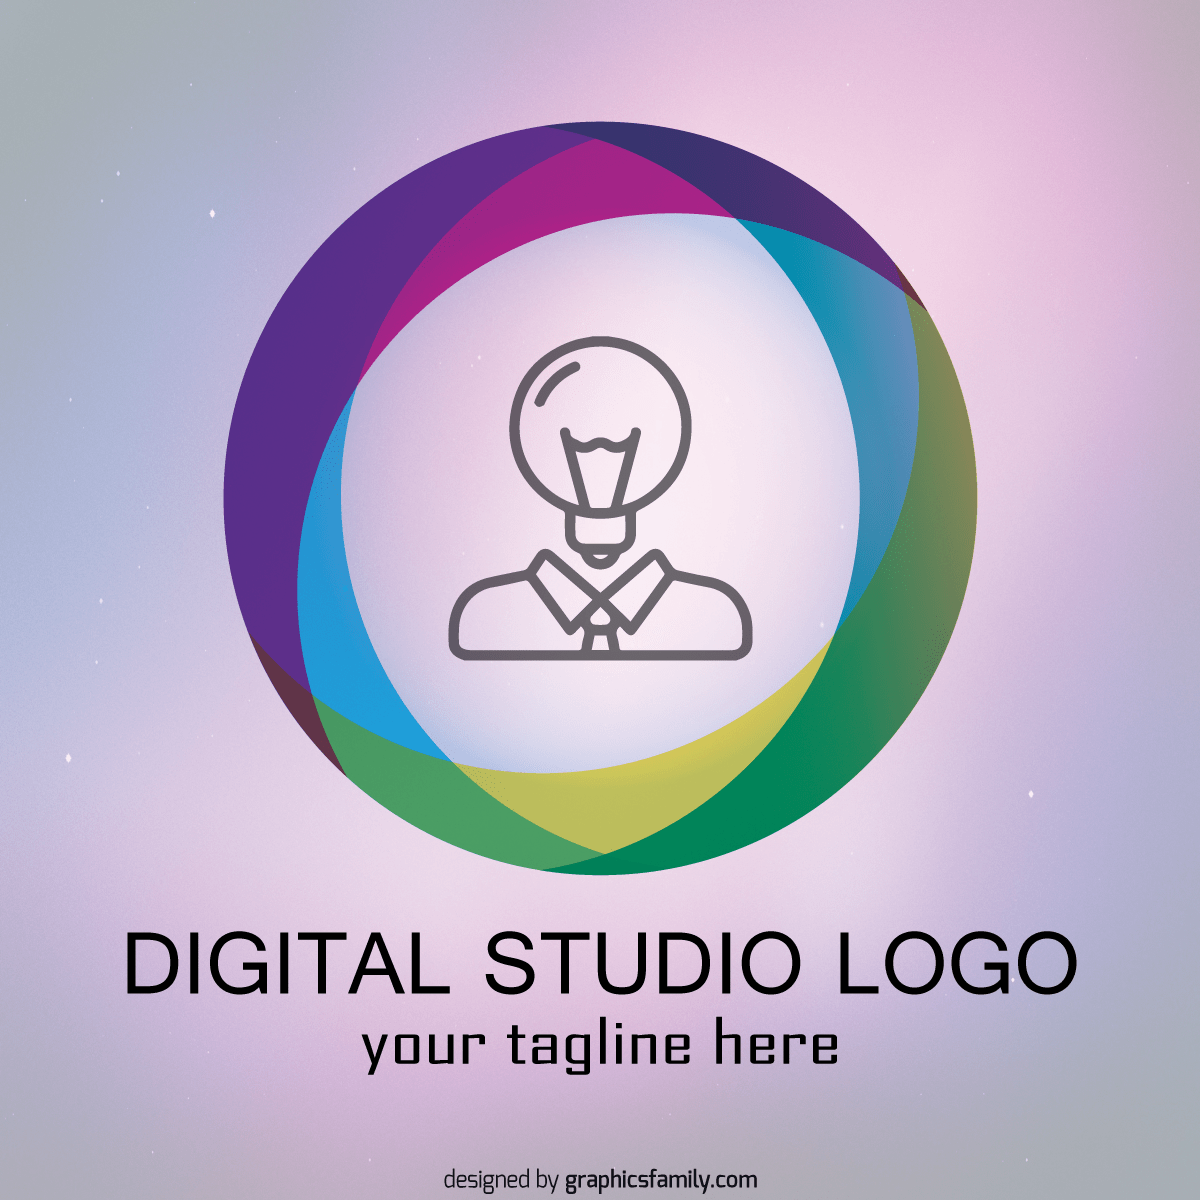 Vector for free use: Design Studio logo